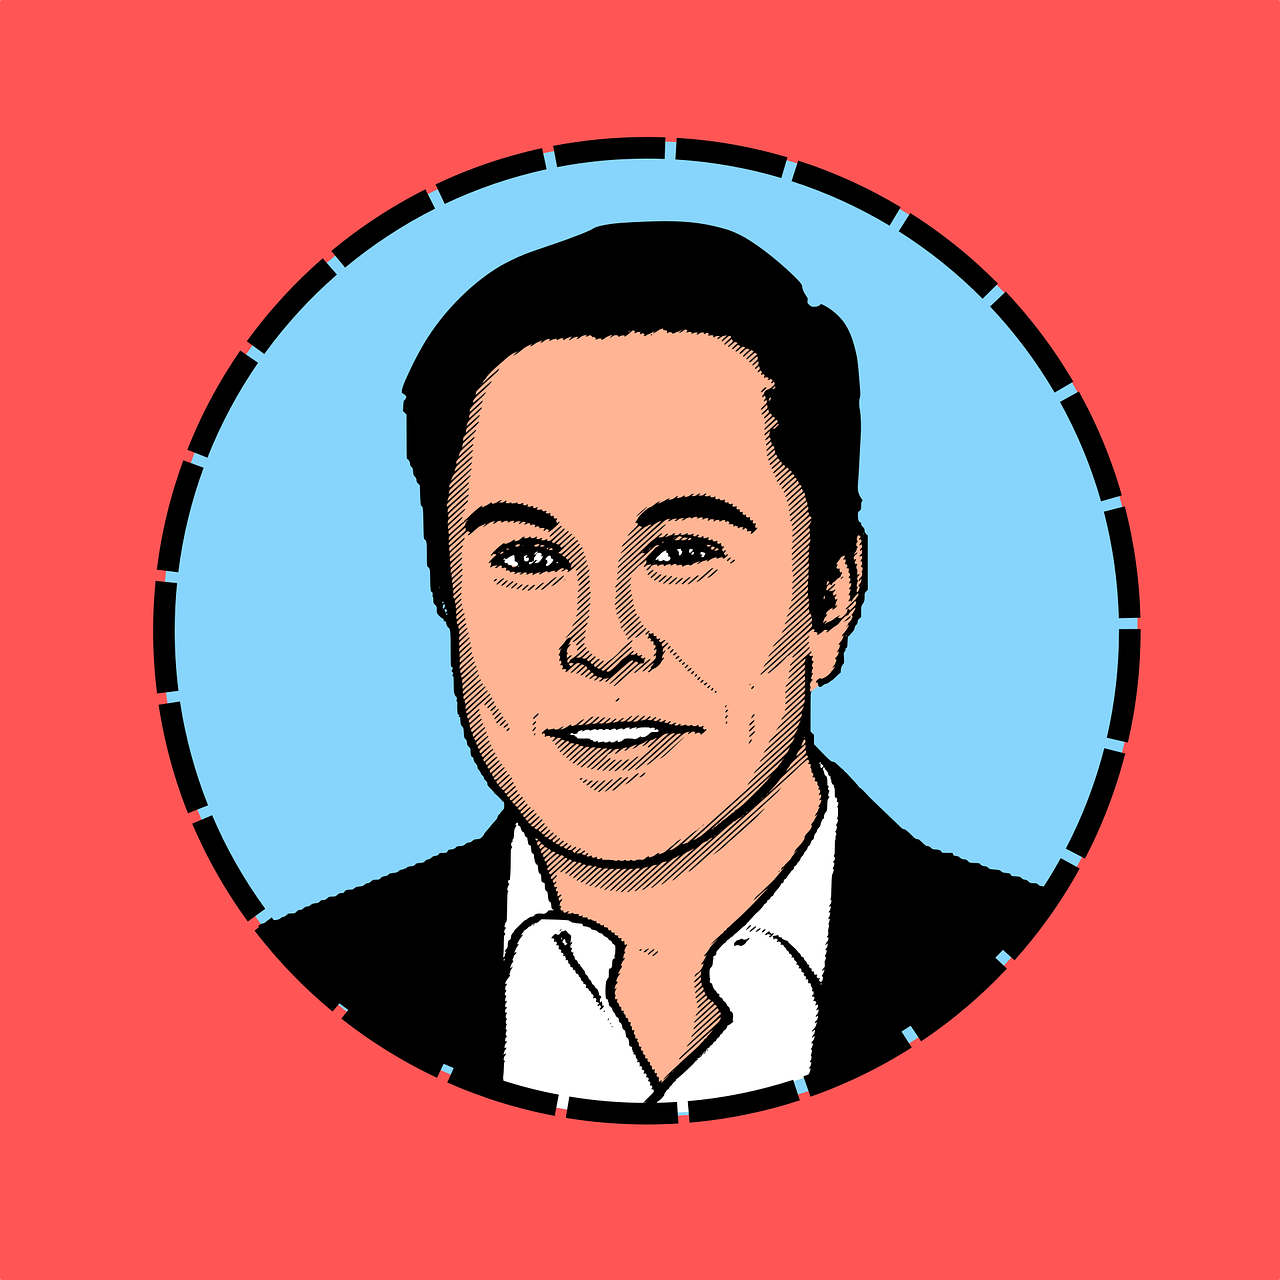 The Controversial Return of Alex Jones to X: Elon Musk's Poll Sparks Debate